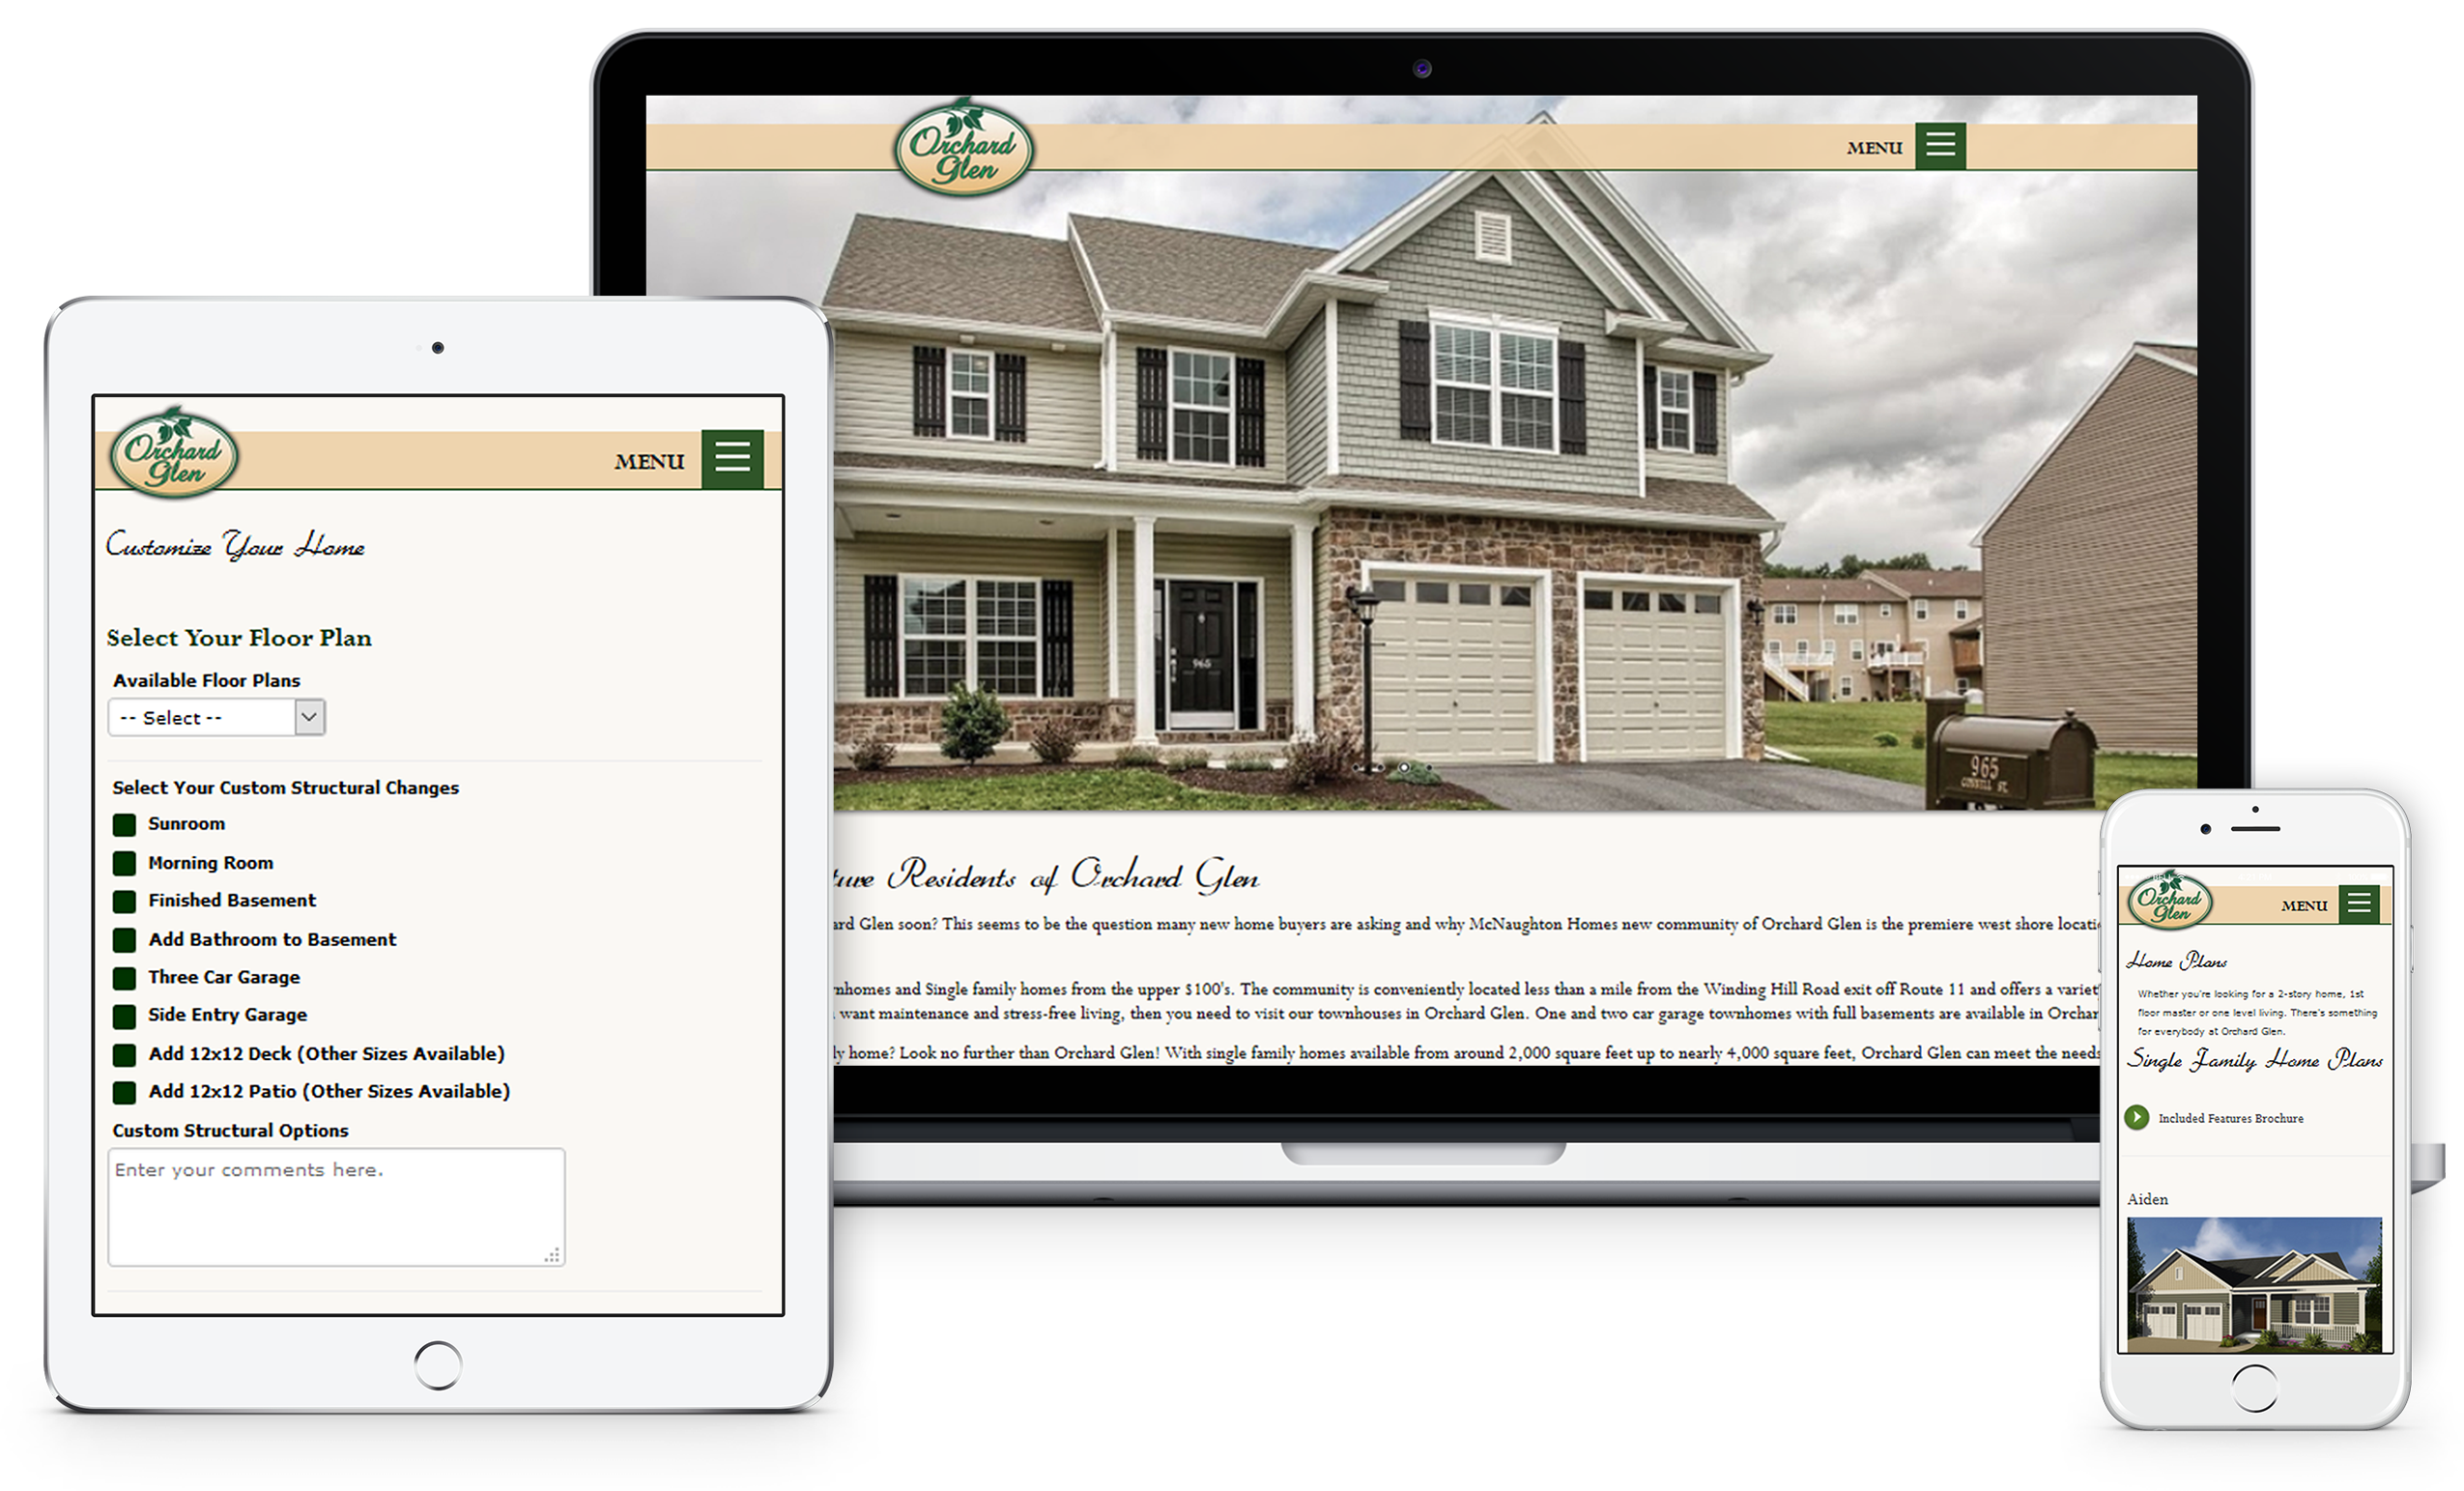 Orchard Glen website design, mechanicsburg pa home builder - HeadAche Designs